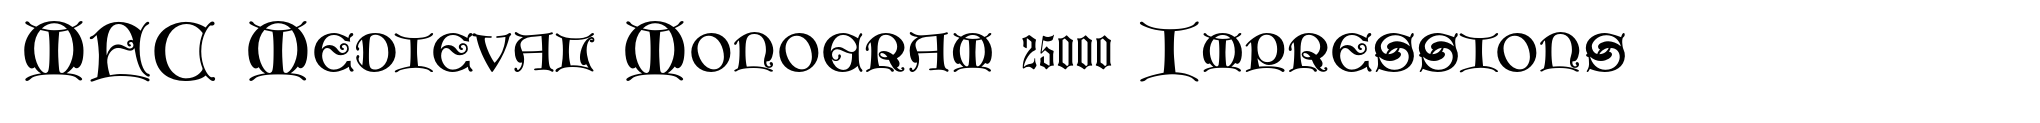 MFC Medieval Monogram 25000 Impressions image